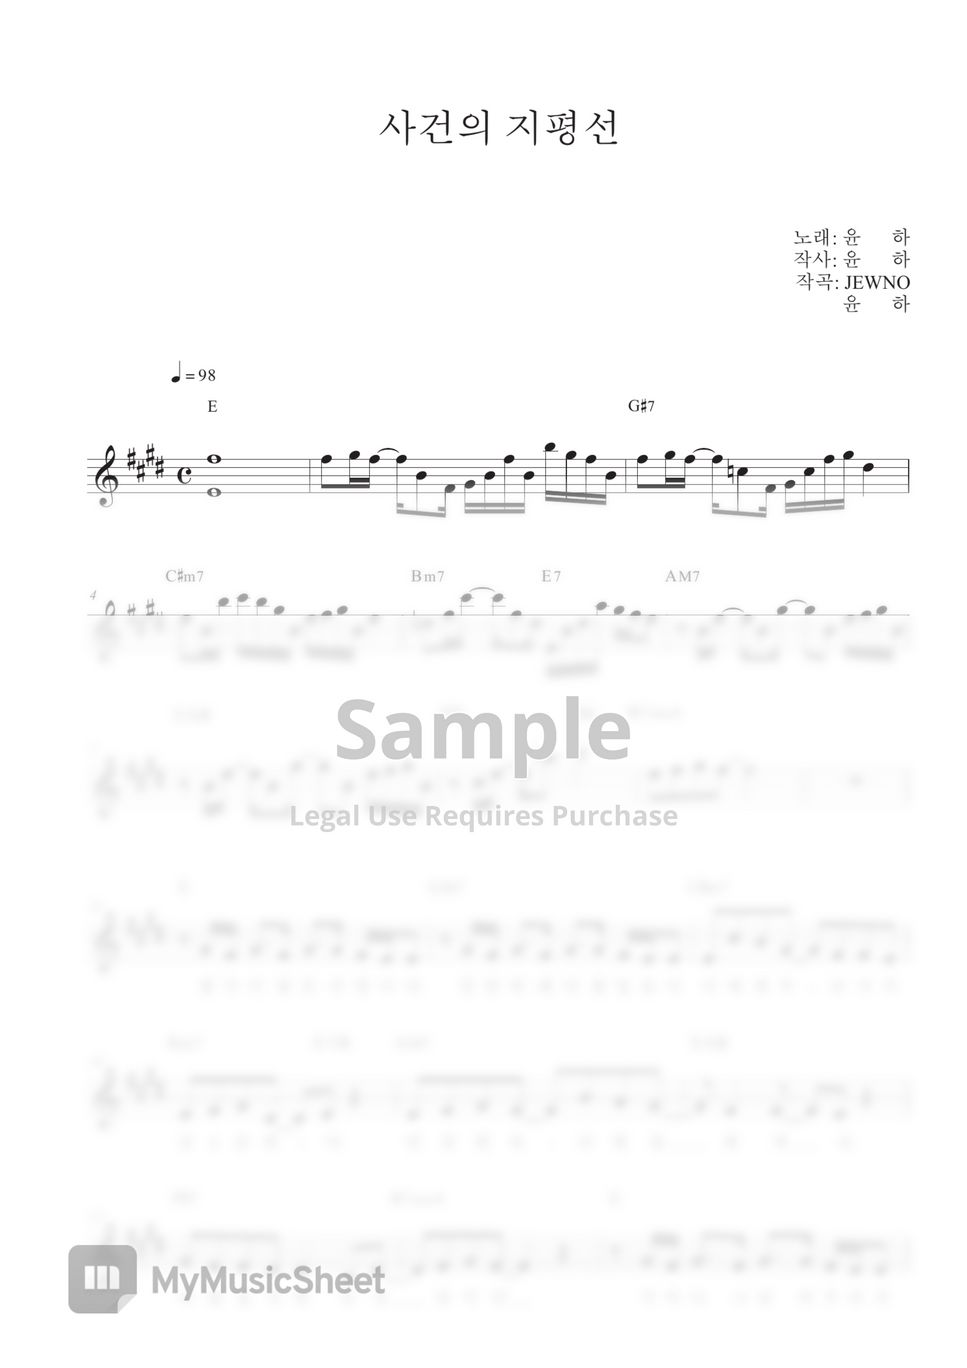 YOUNHA - Event Horizon E Major (Clarinet / Lyrics / Chords) by thesaxophonist